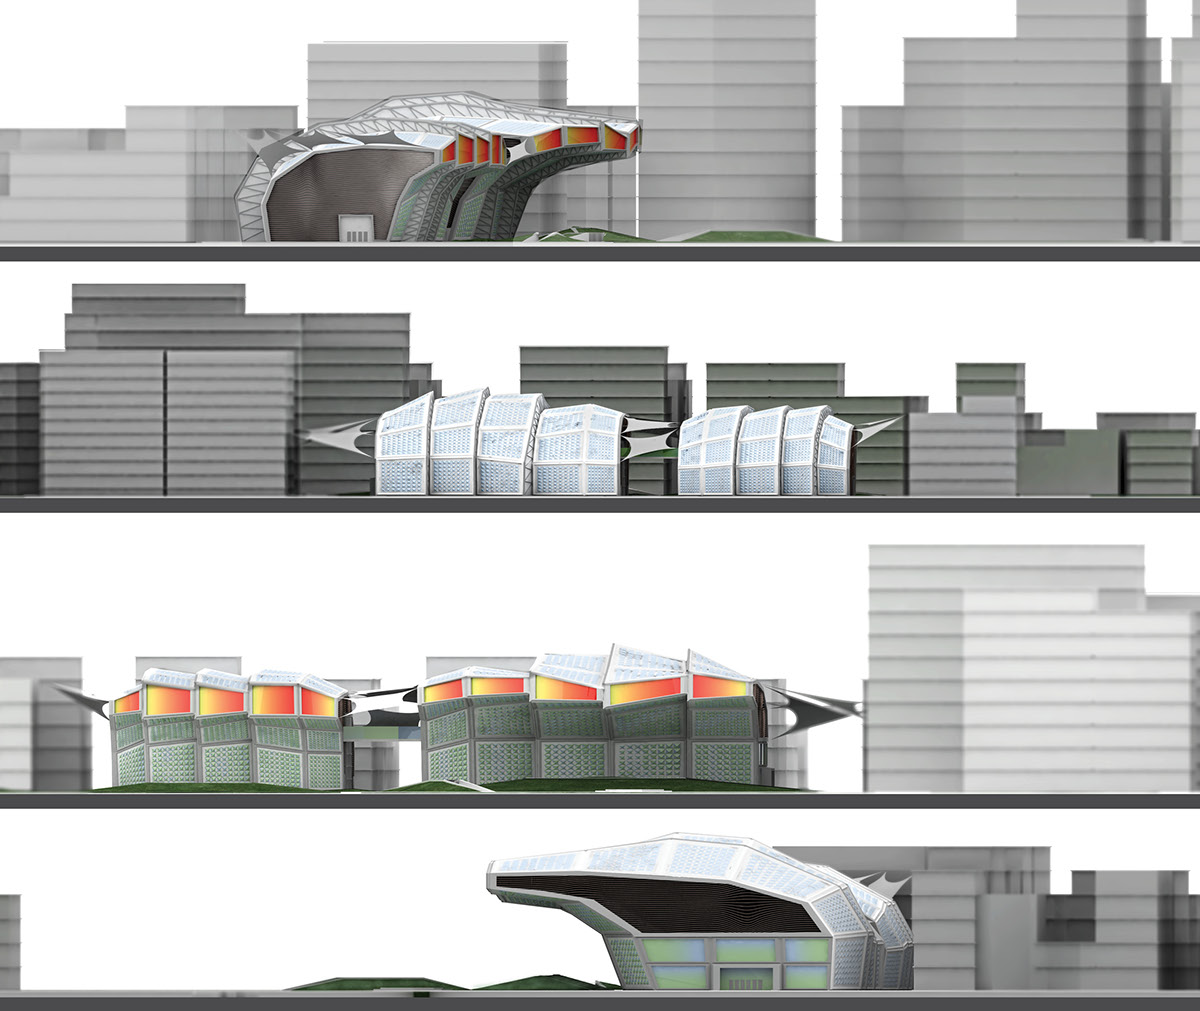 Performance arts building plaza Grasshopper rendering Urban pavilion process design civi cultural